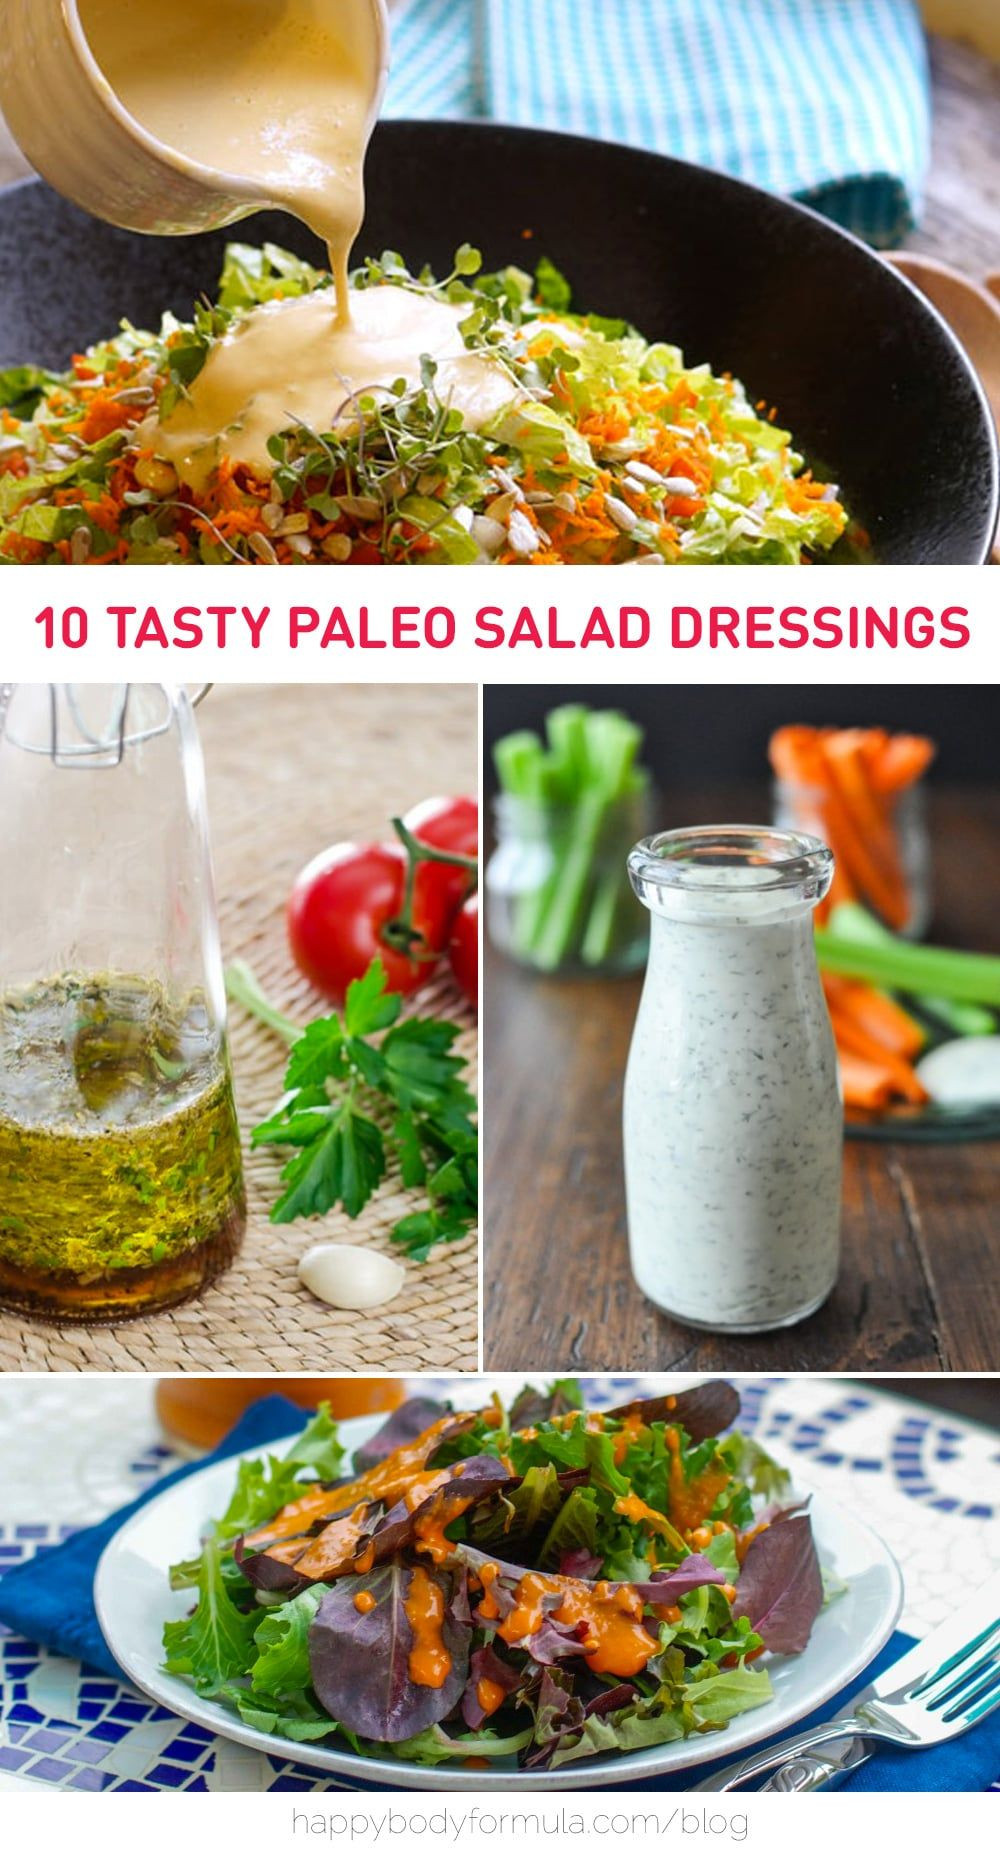 Paleo Salad Dressings Recipes
 10 Tasty Paleo Salad Dressing Recipes